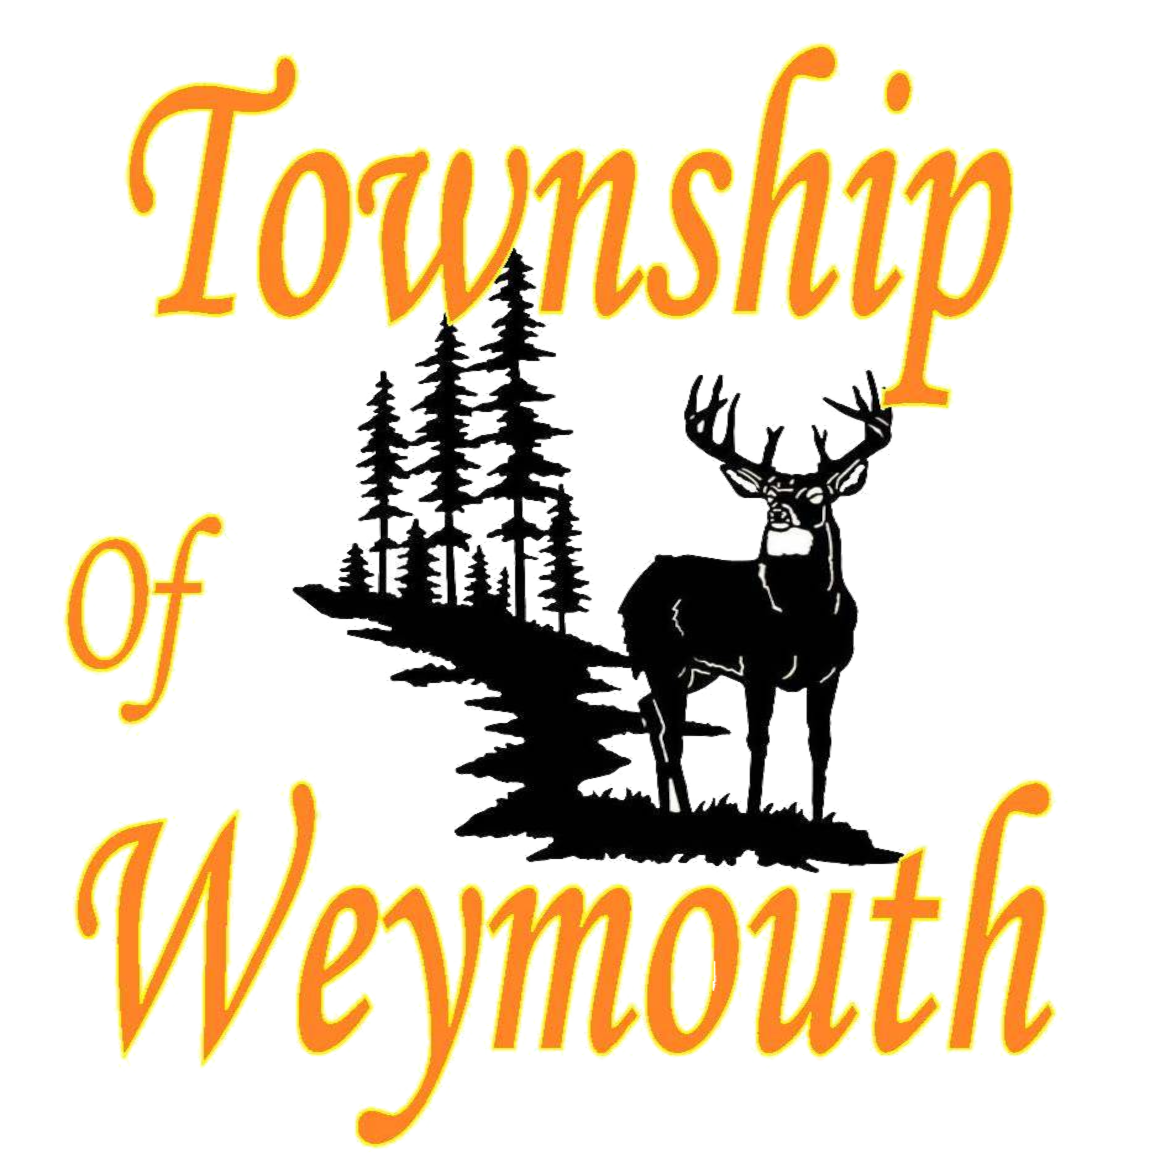 Weymouth Township